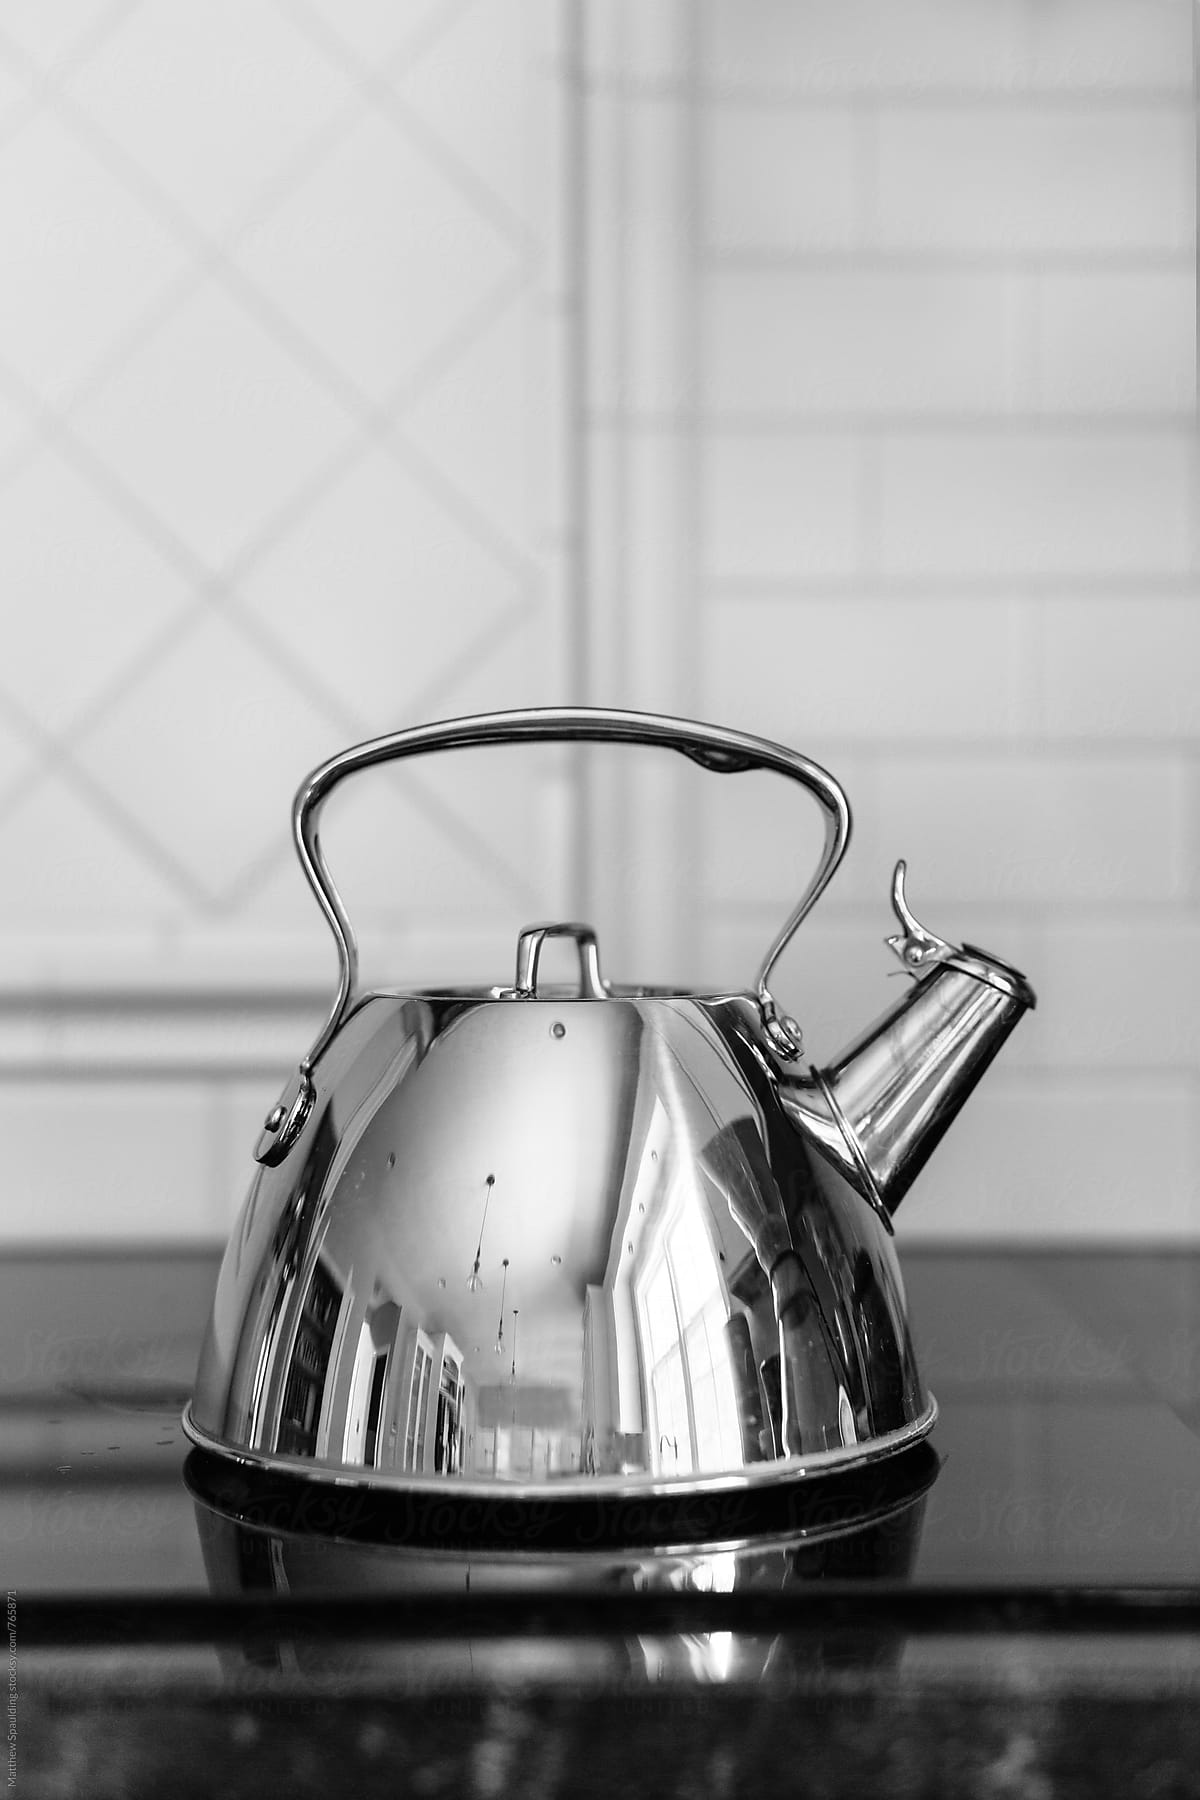 Shiny tea kettle on stove top